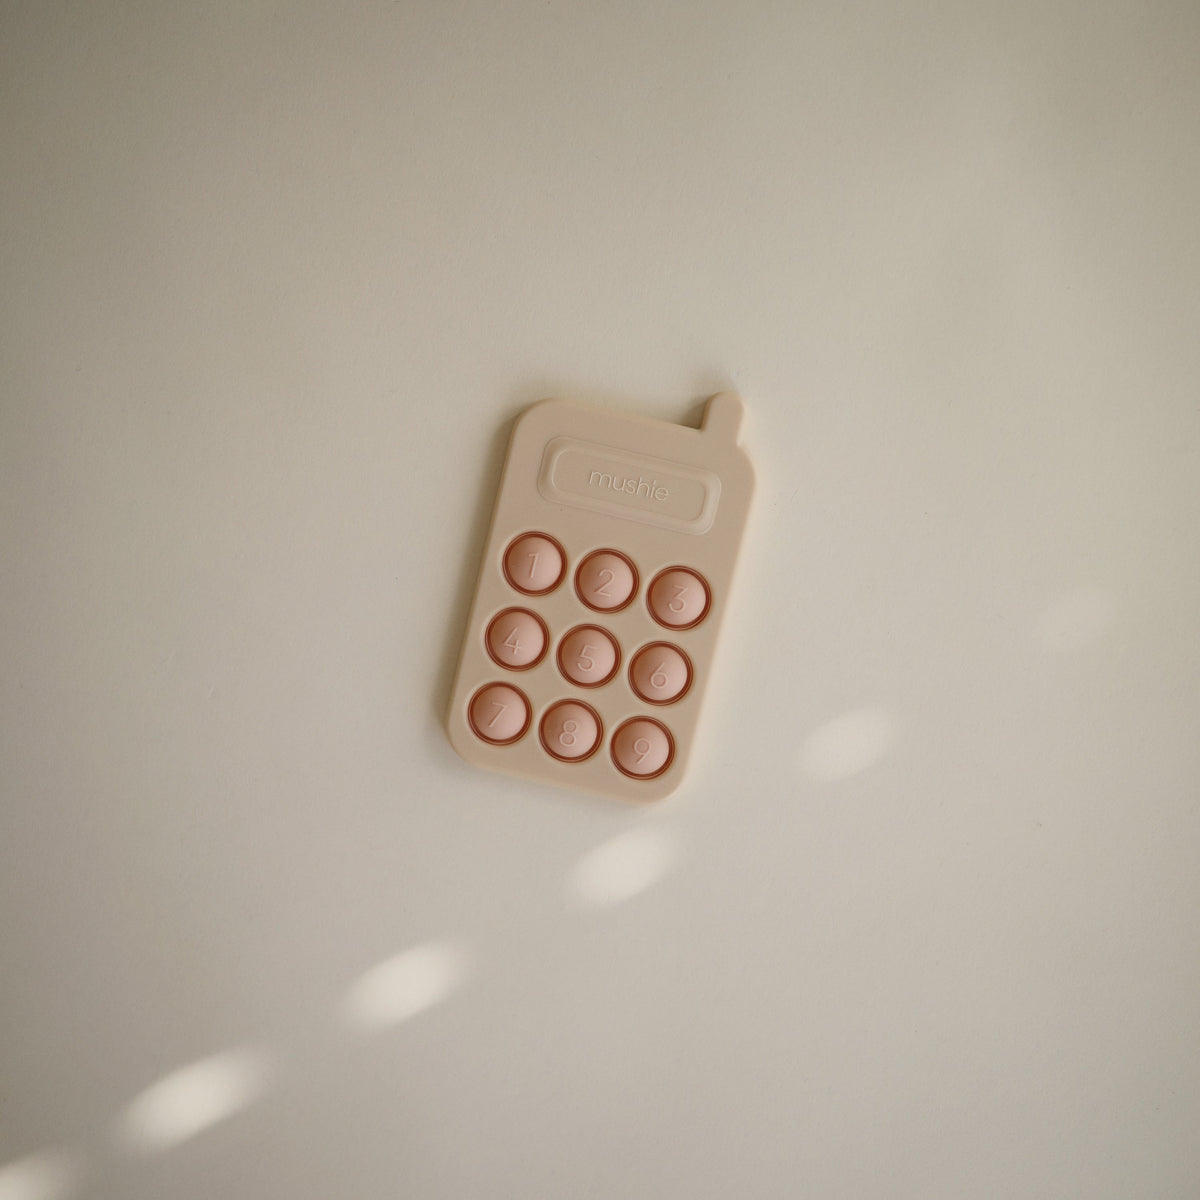 Mushie - Phone Press Toy (Blush)